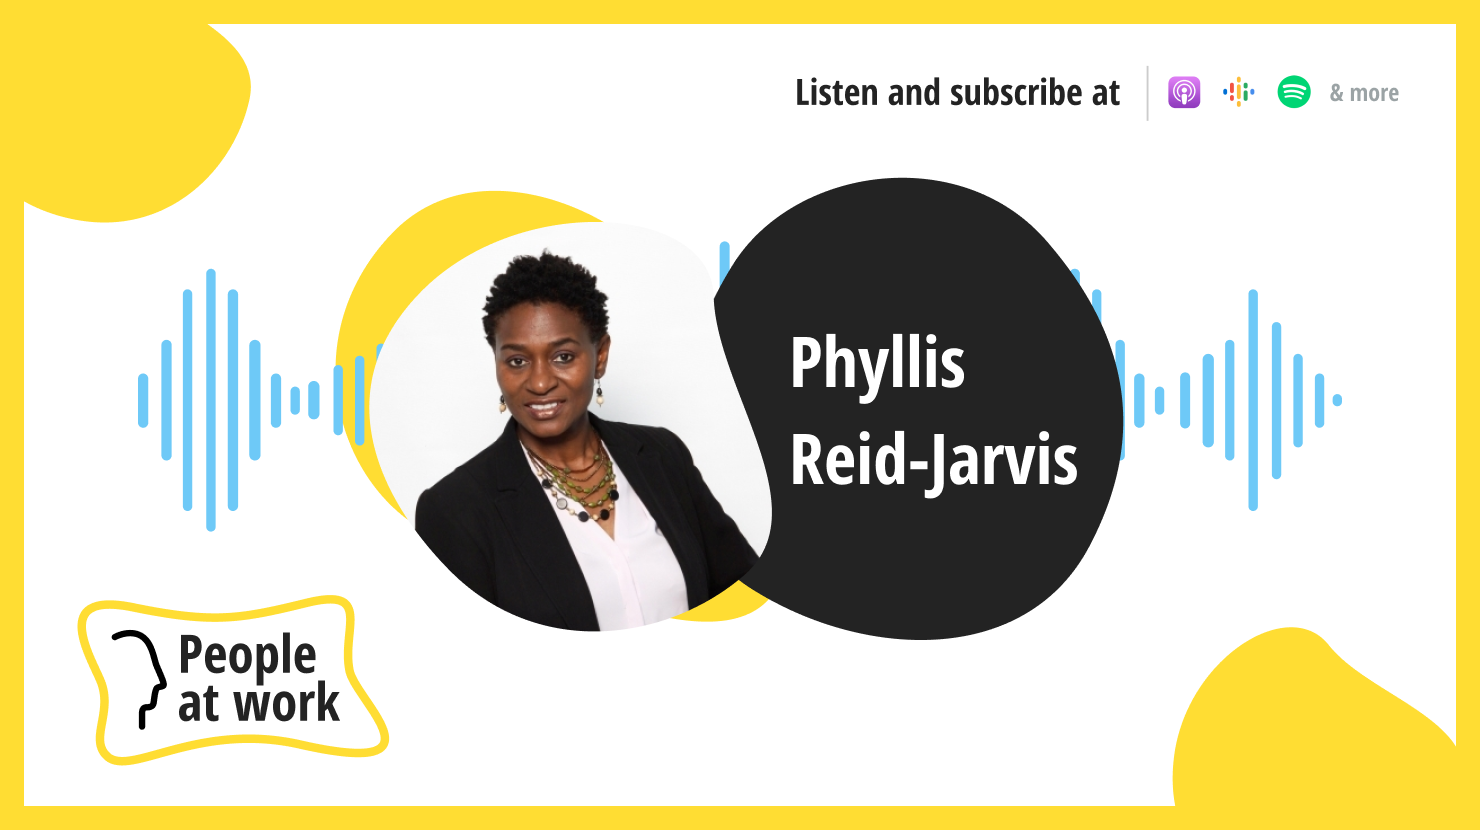 21st century workforce considerations feat. Phyllis Reid-Jarvis